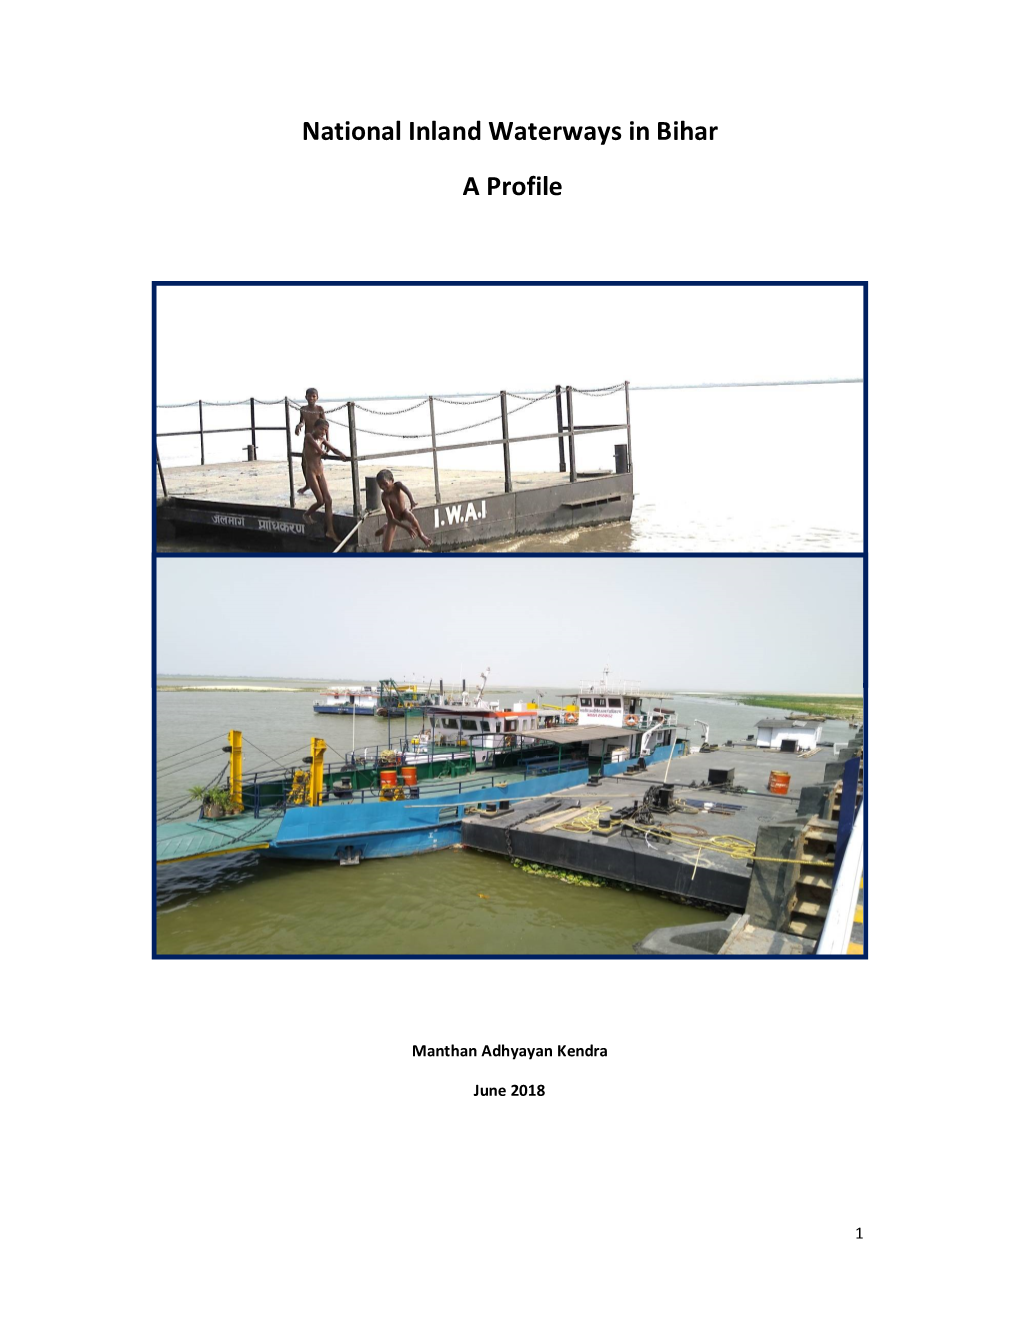 National Inland Waterways in Bihar a Profile